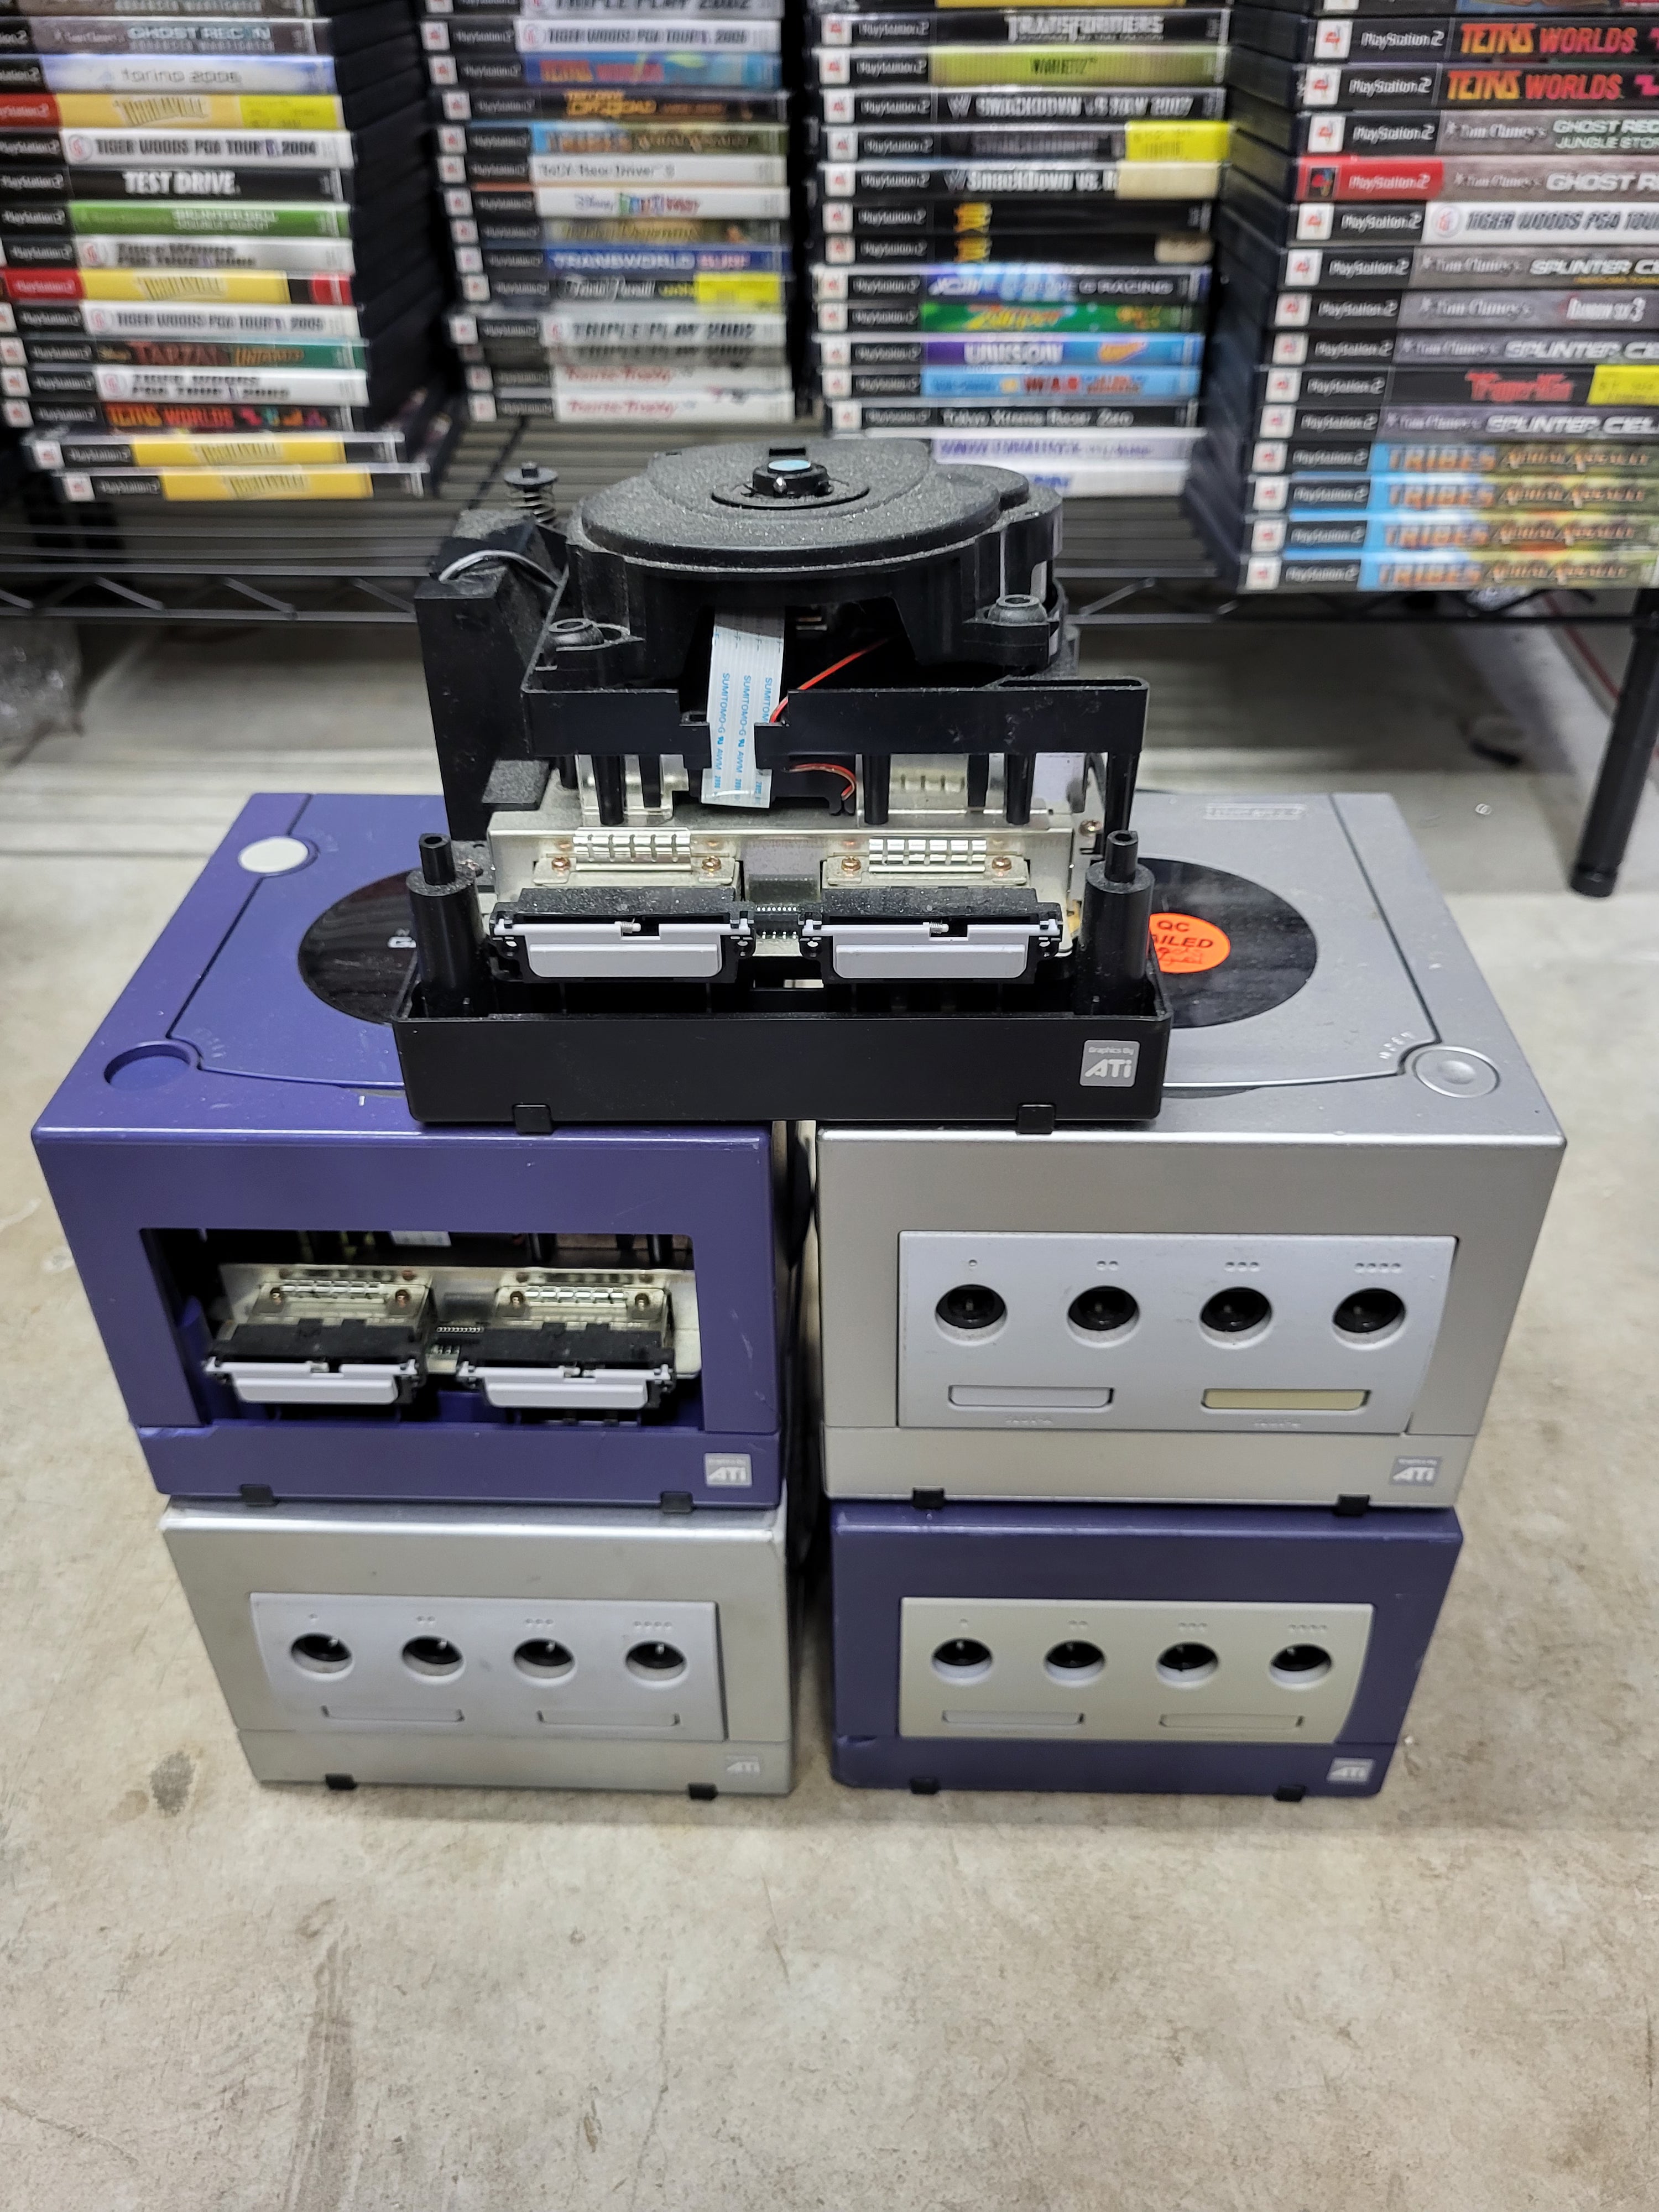 Lot of 5 Nintendo GameCube Consoles for Parts or Repair